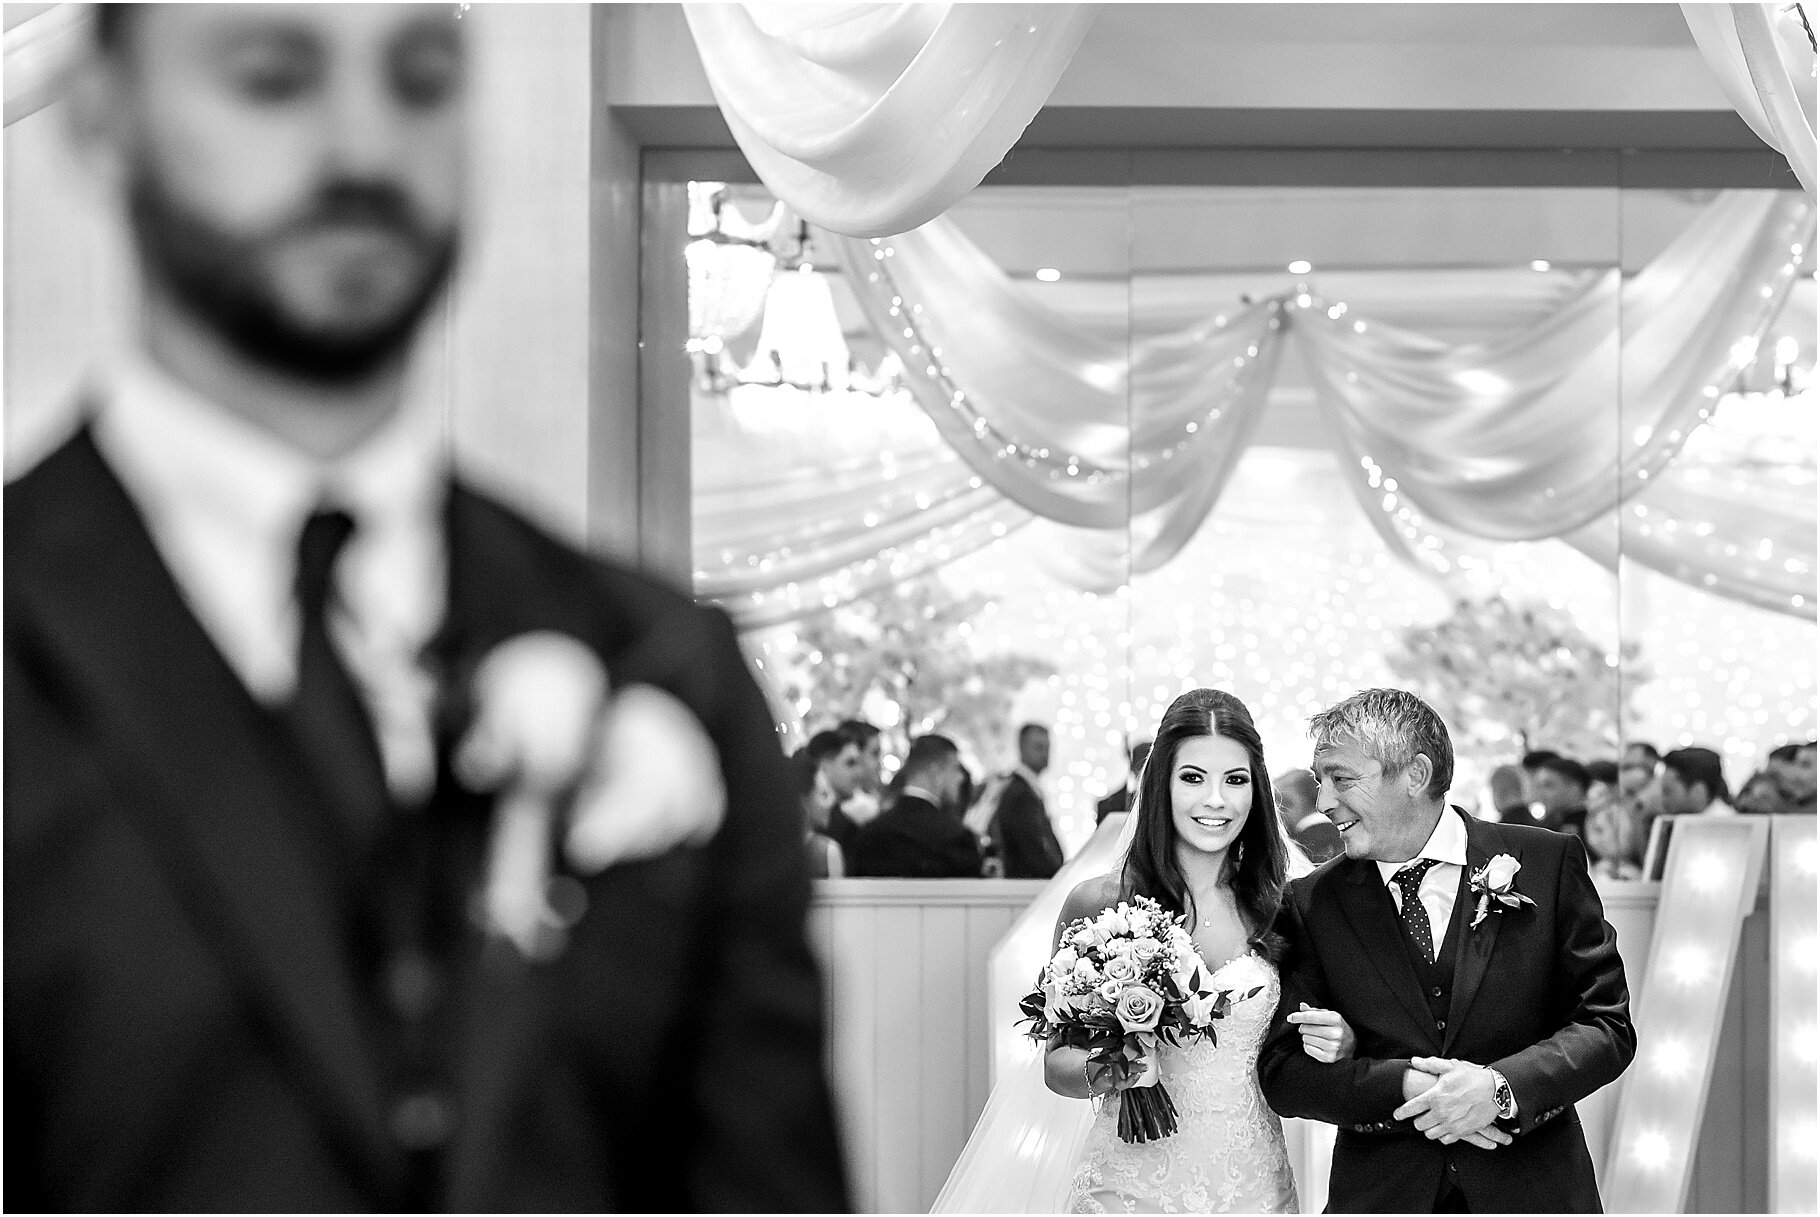 dan-wootton-photography-wedding-highlights-2019-136.jpg